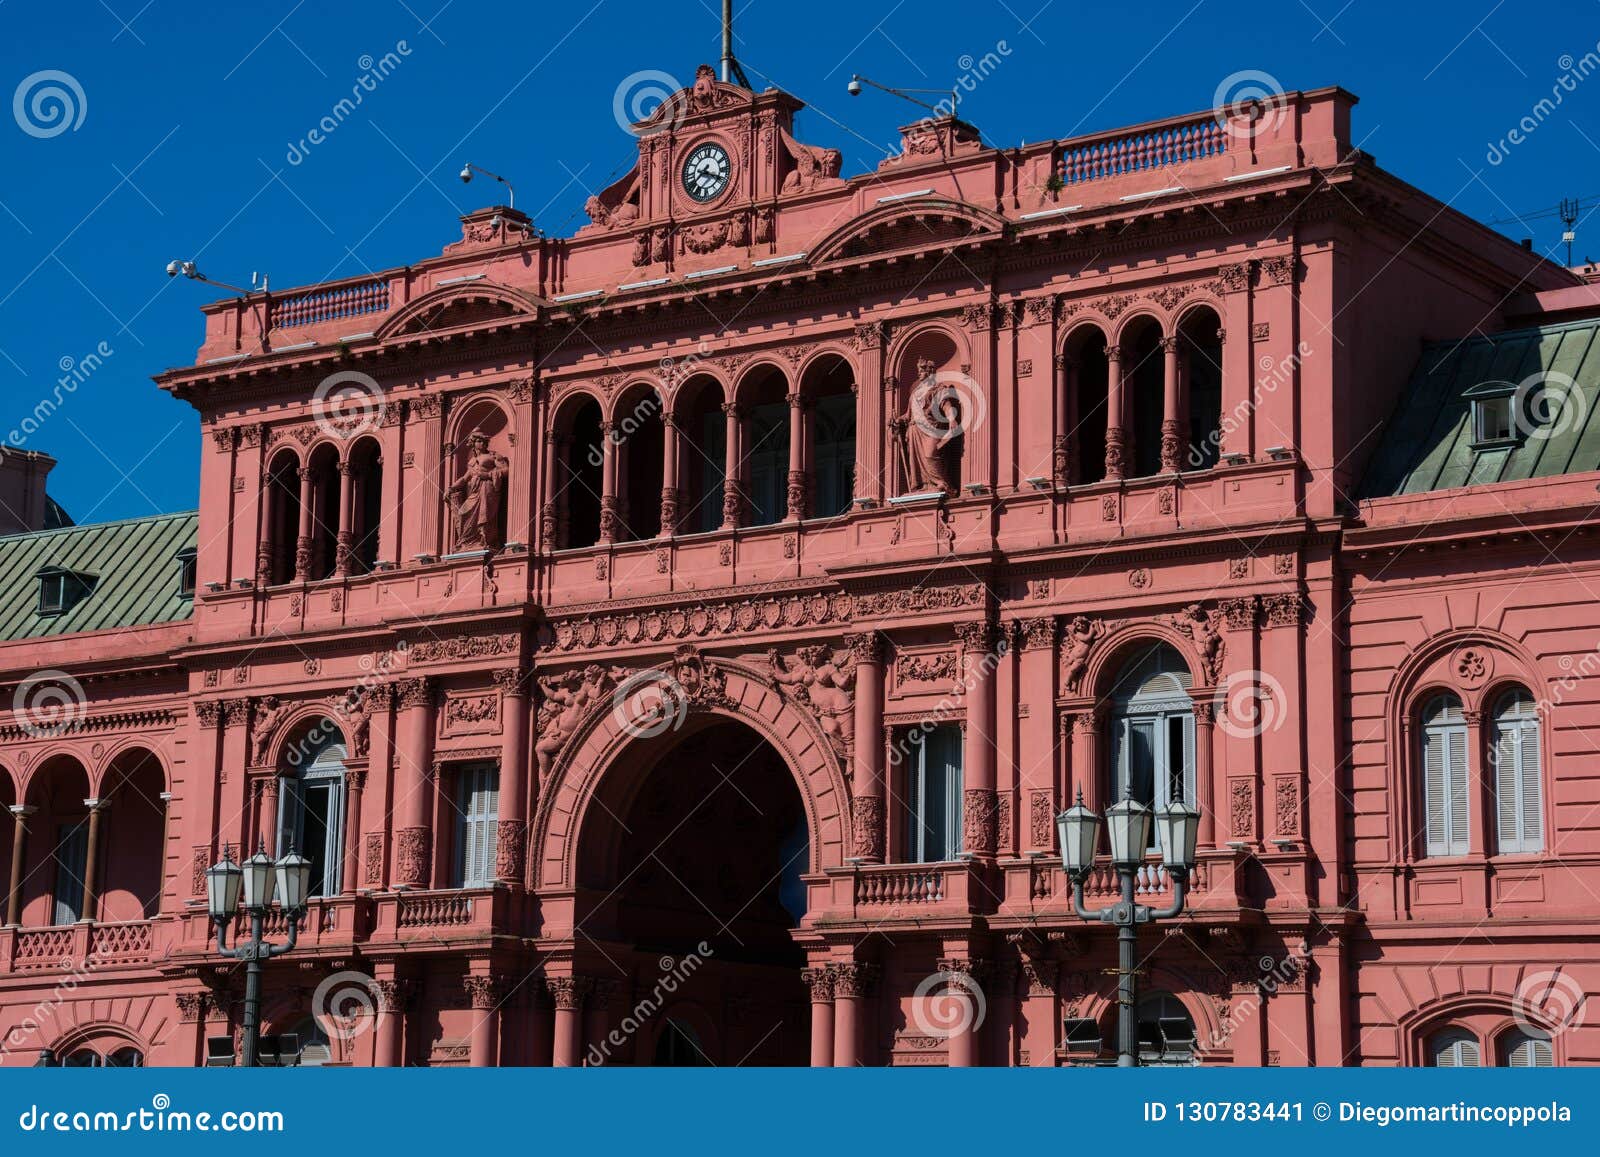 the pink house casa rosada also known as government house casa de gobierno